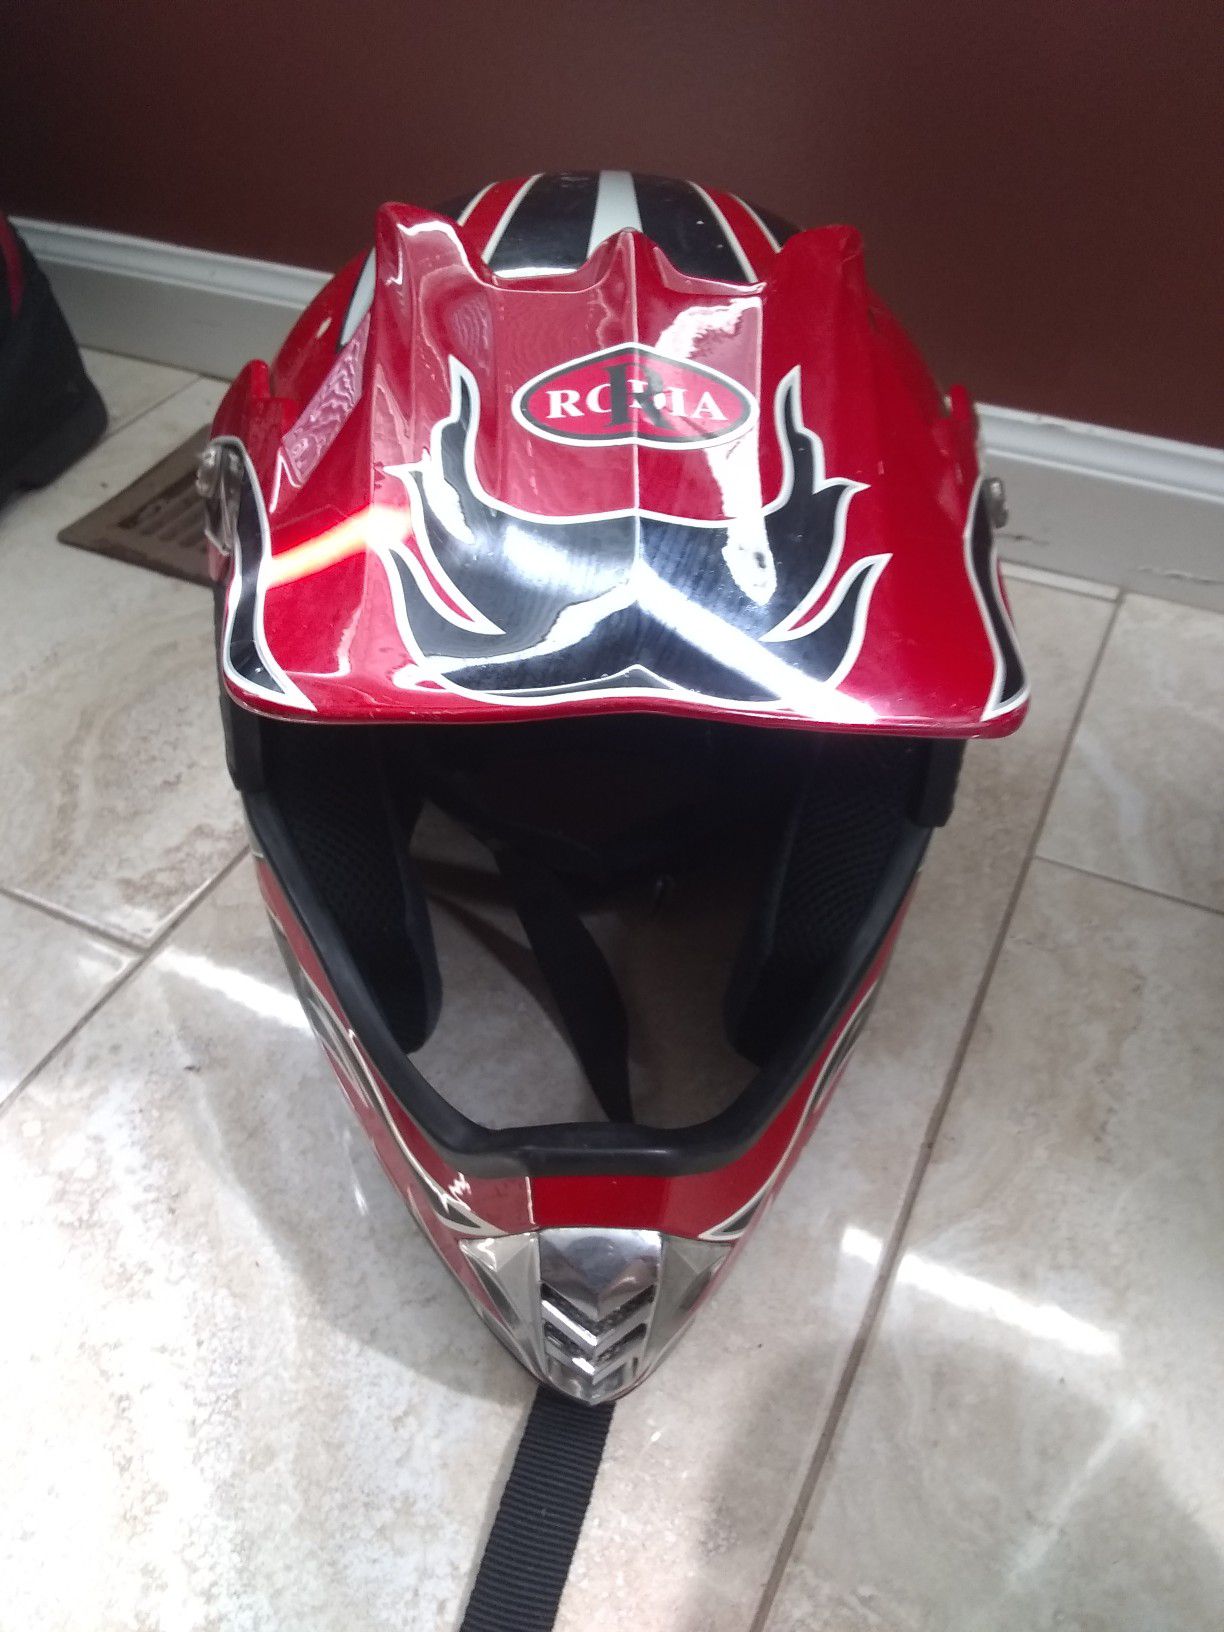 Rodia motorcycle helmet